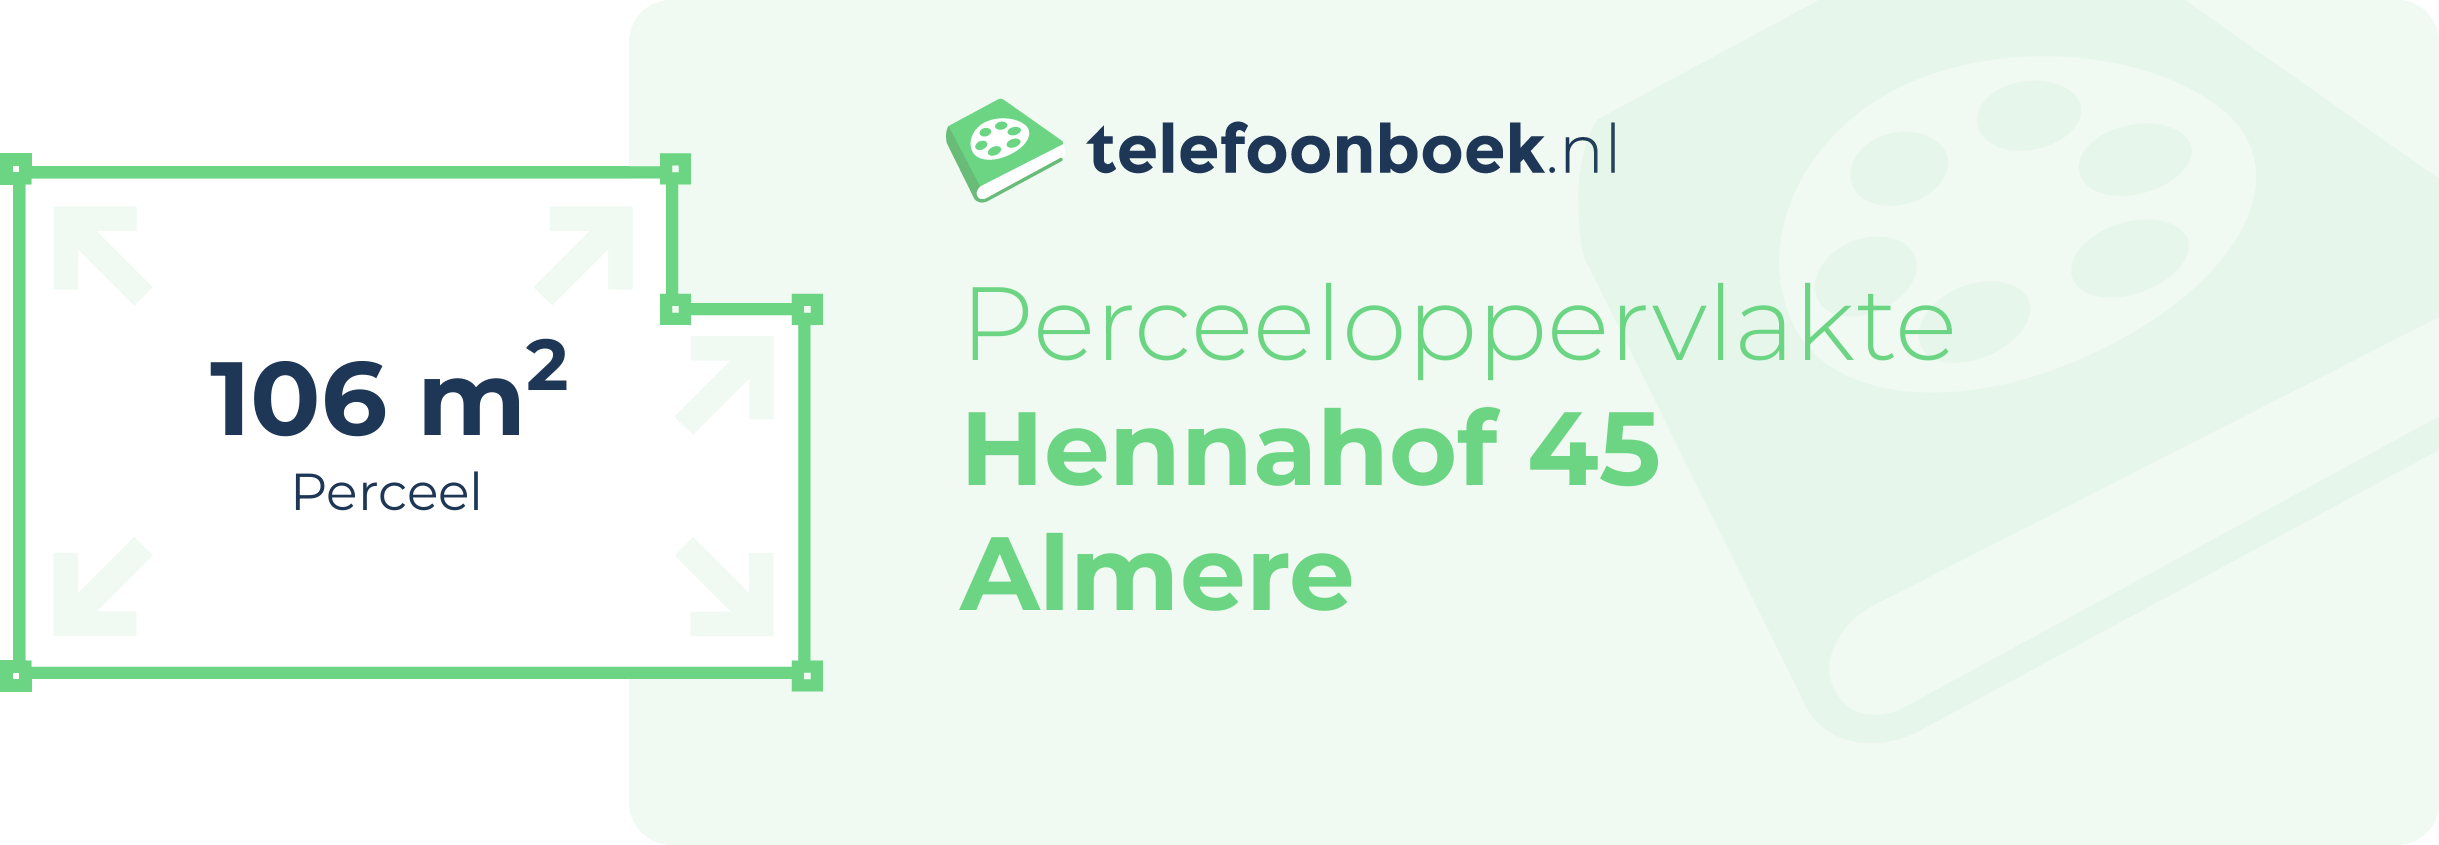 Perceeloppervlakte Hennahof 45 Almere